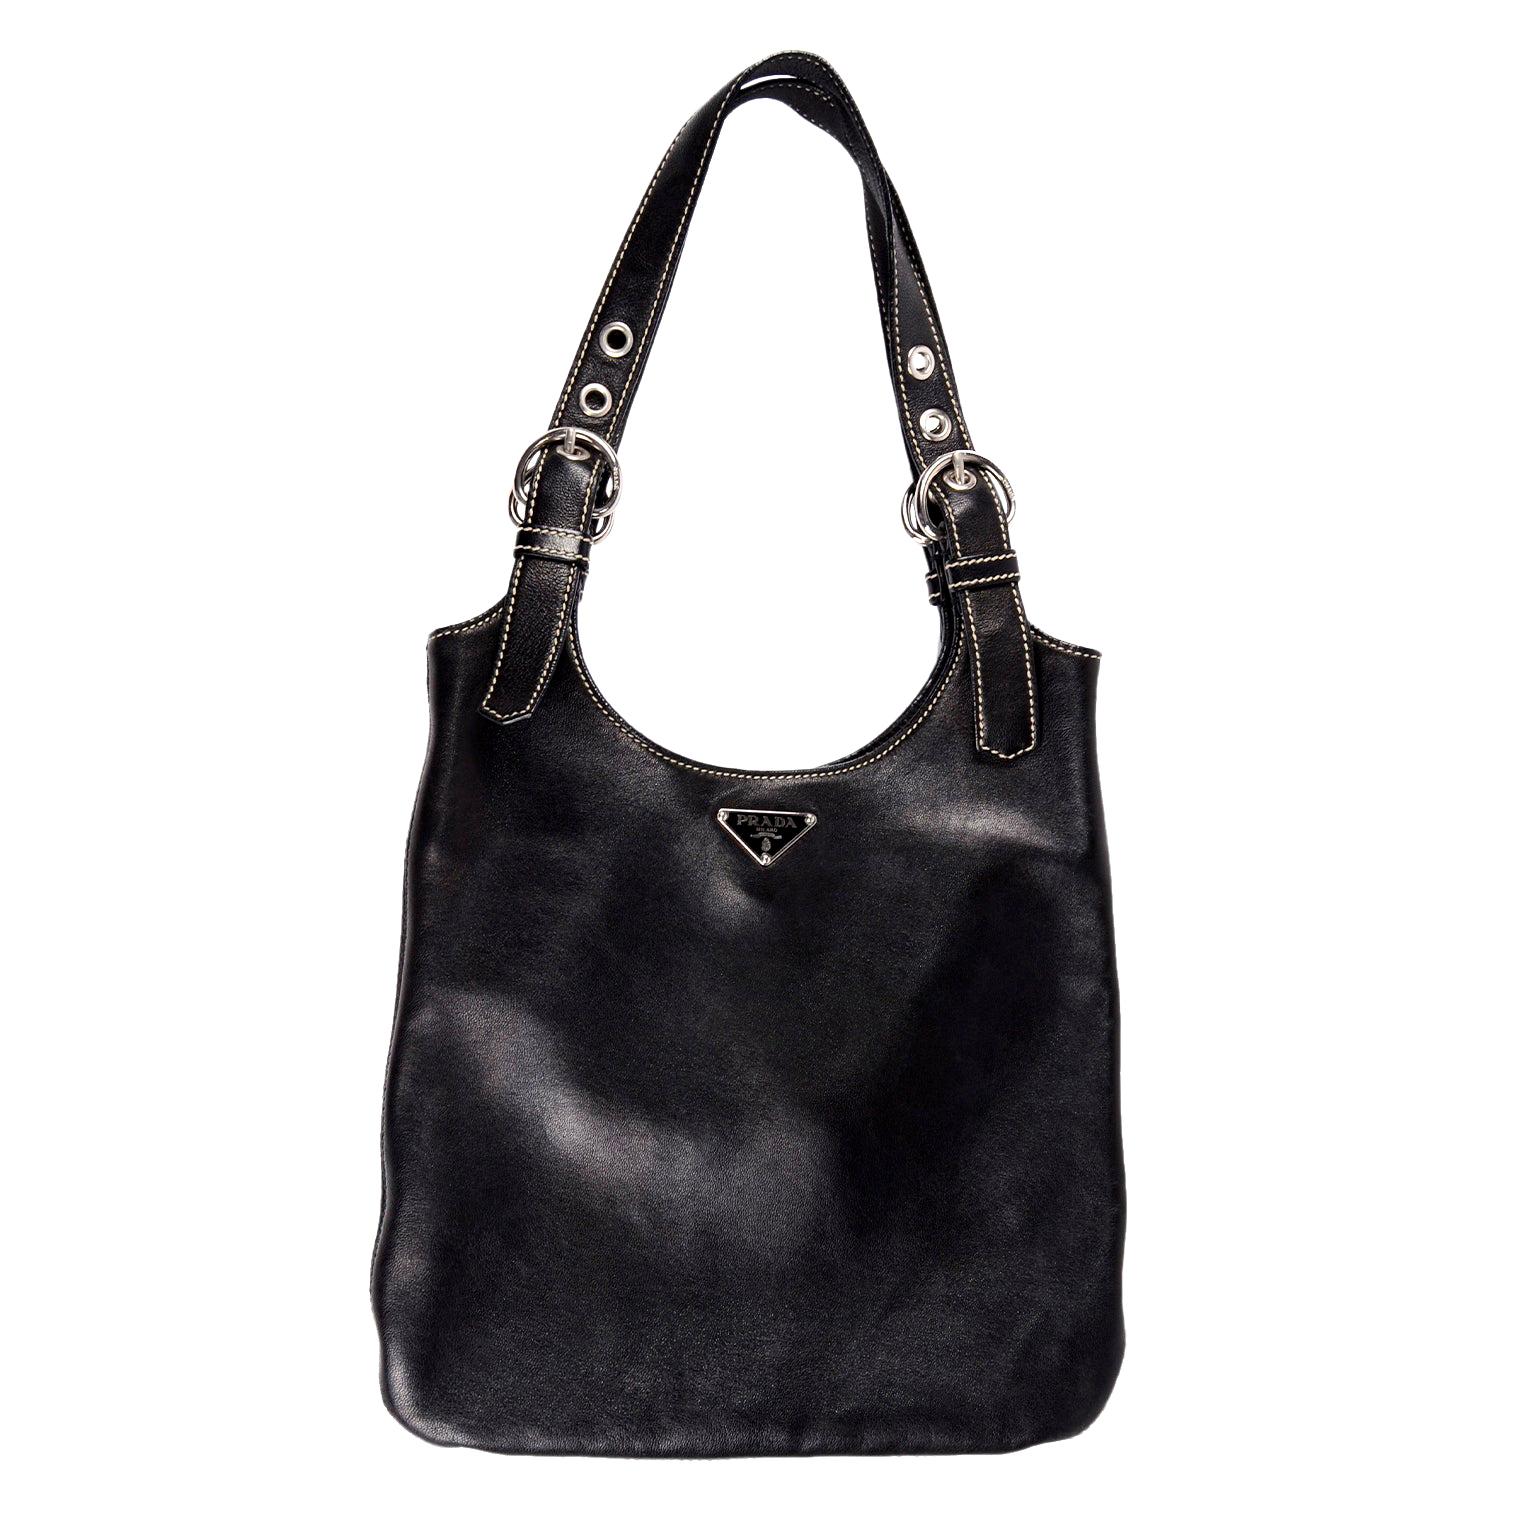 1990s Prada Handbag Black Lambskin Leather Shoulder Hobo Bag With Buckles